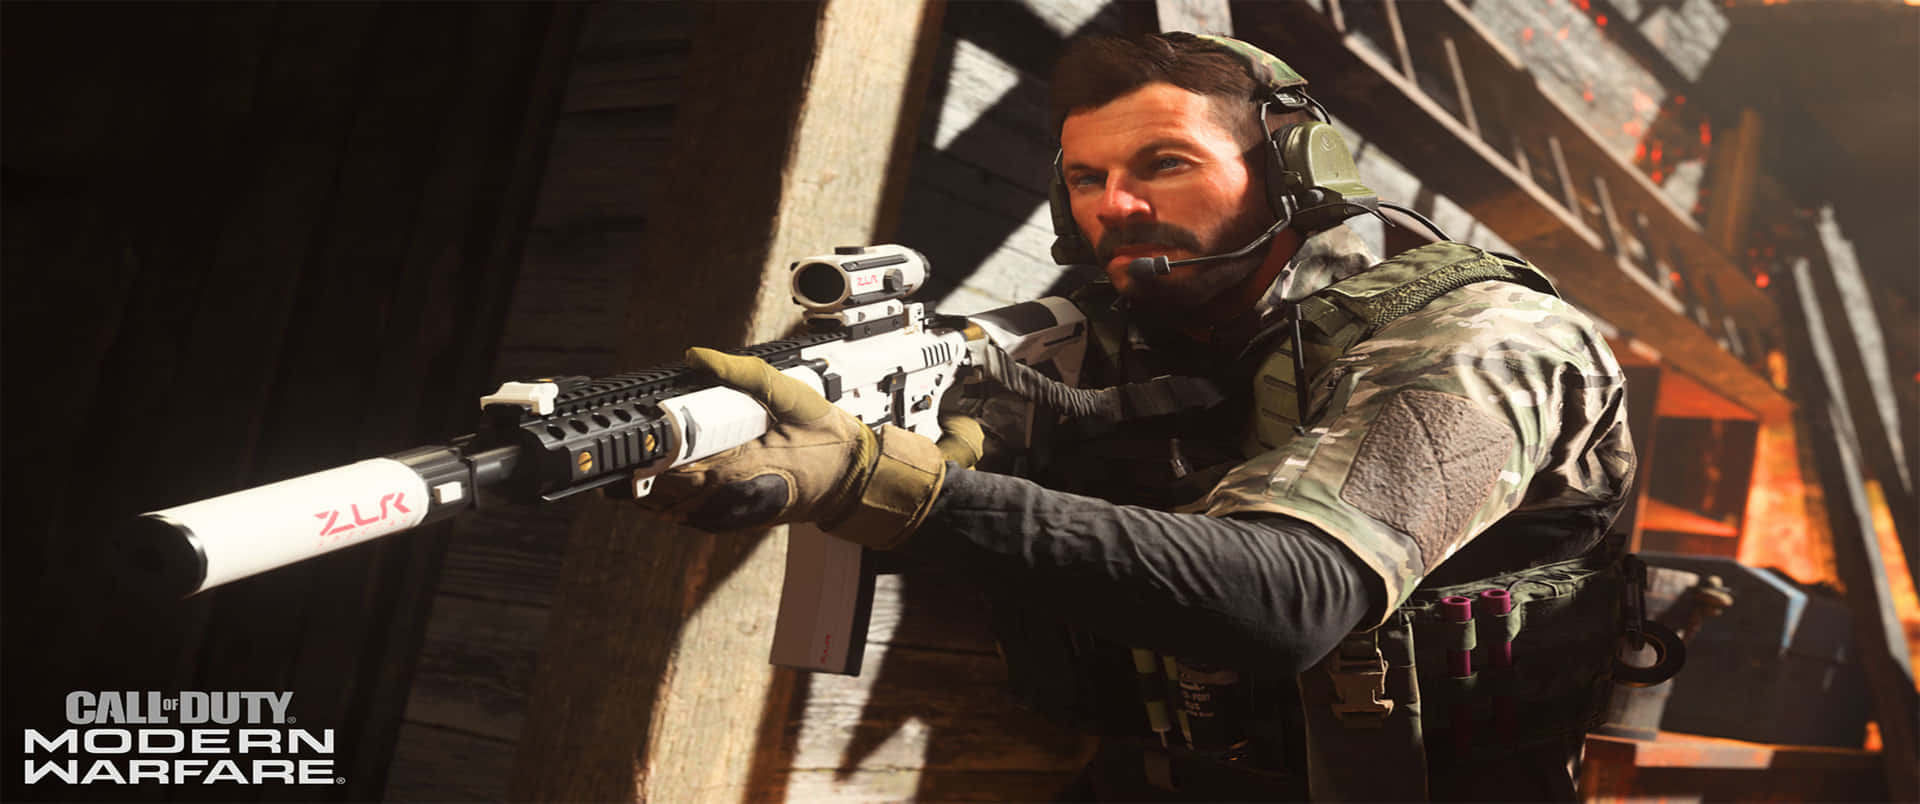 Alexkeller 3440x1440p Bakgrundsbild Call Of Duty Modern Warfare.